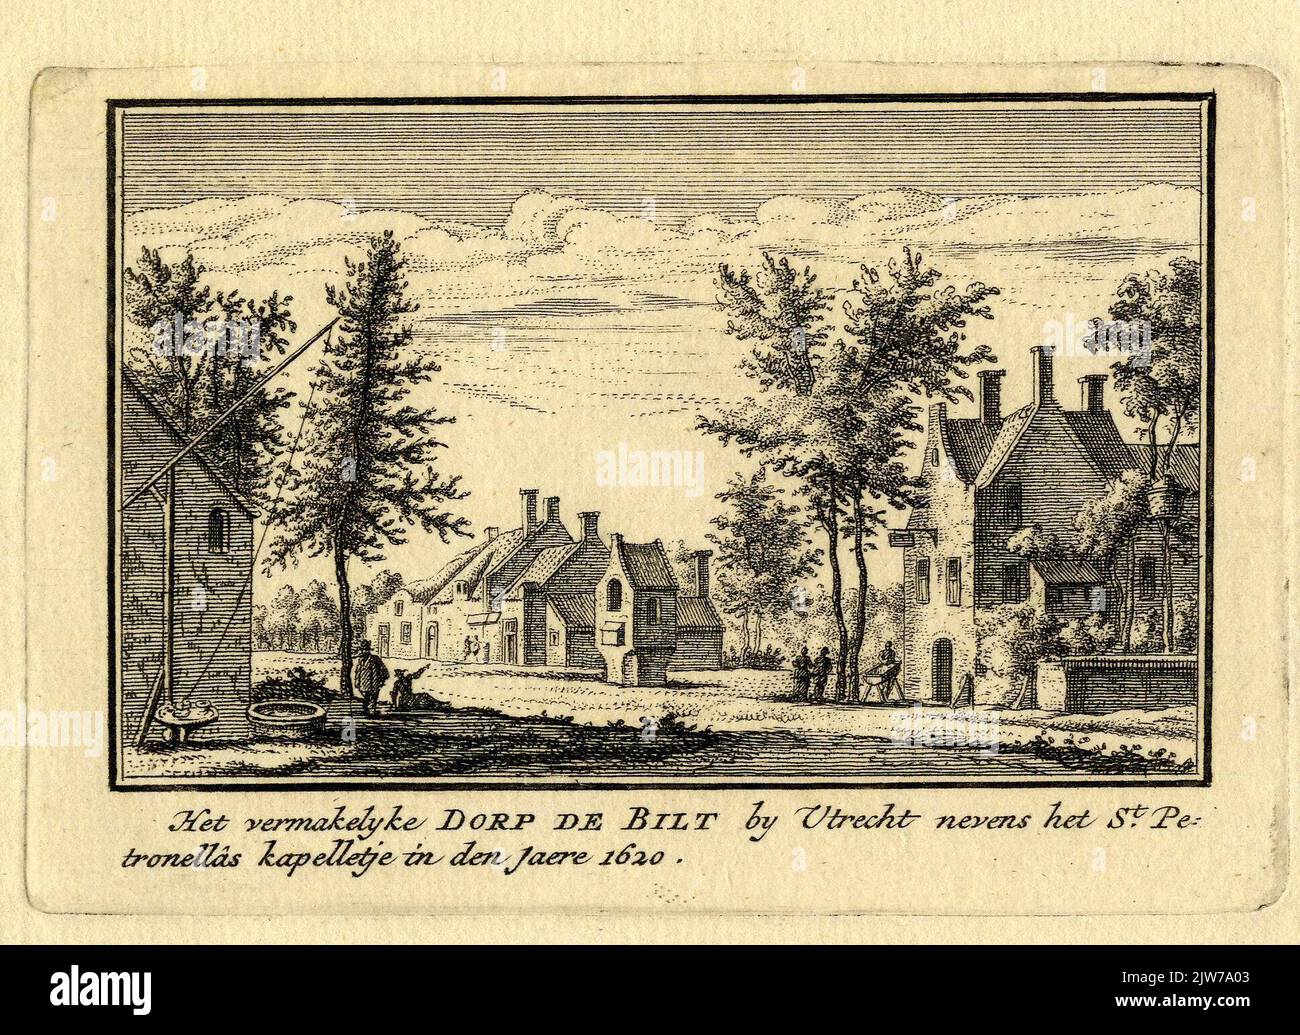 The entertaining village De Bilt by Utrecht Near the St. PE = / Tronellâs chapel in the Jaere 1620. Stock Photo